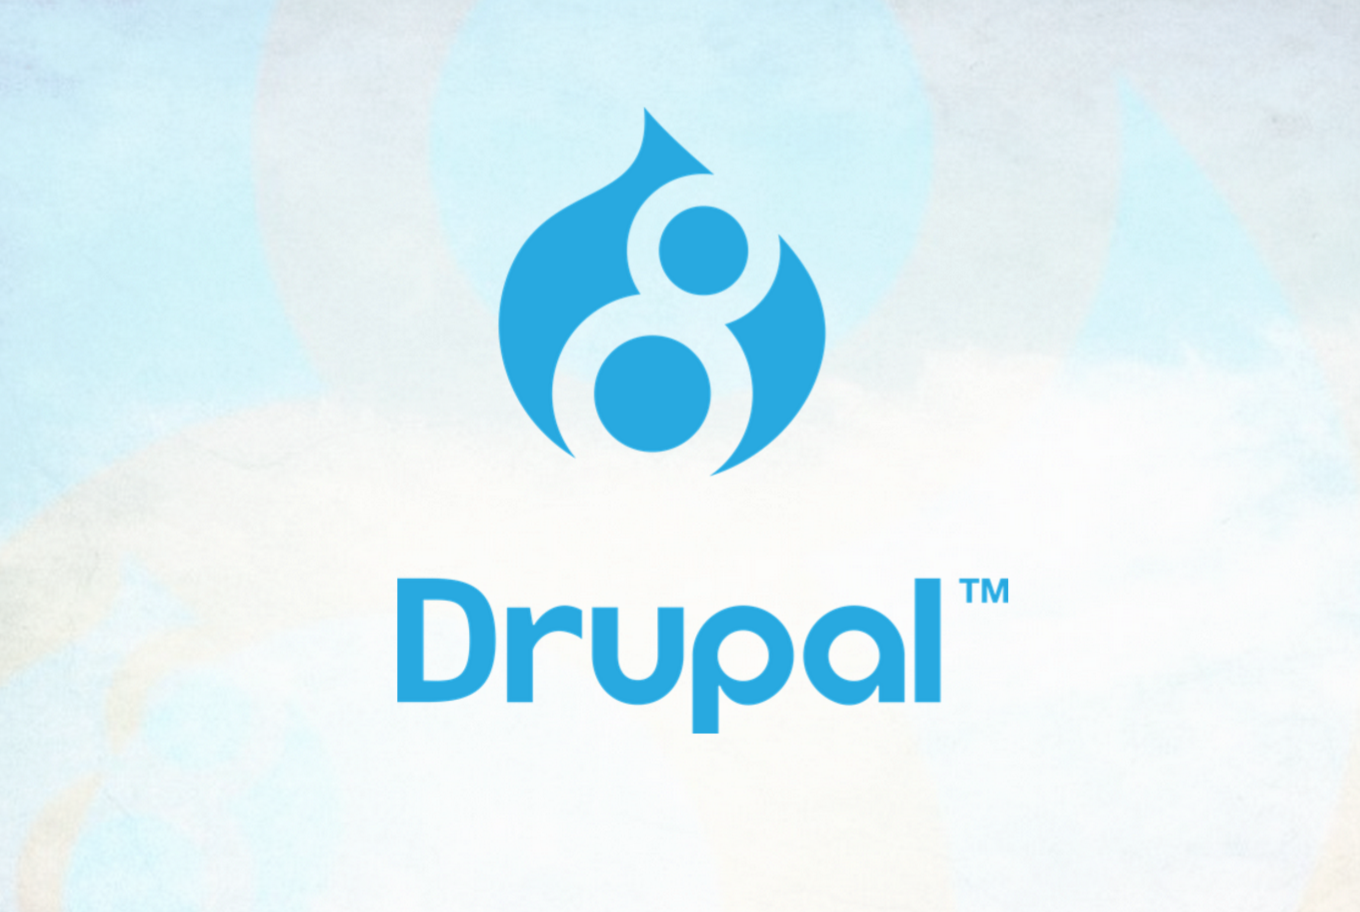 Logo de Drupal 8